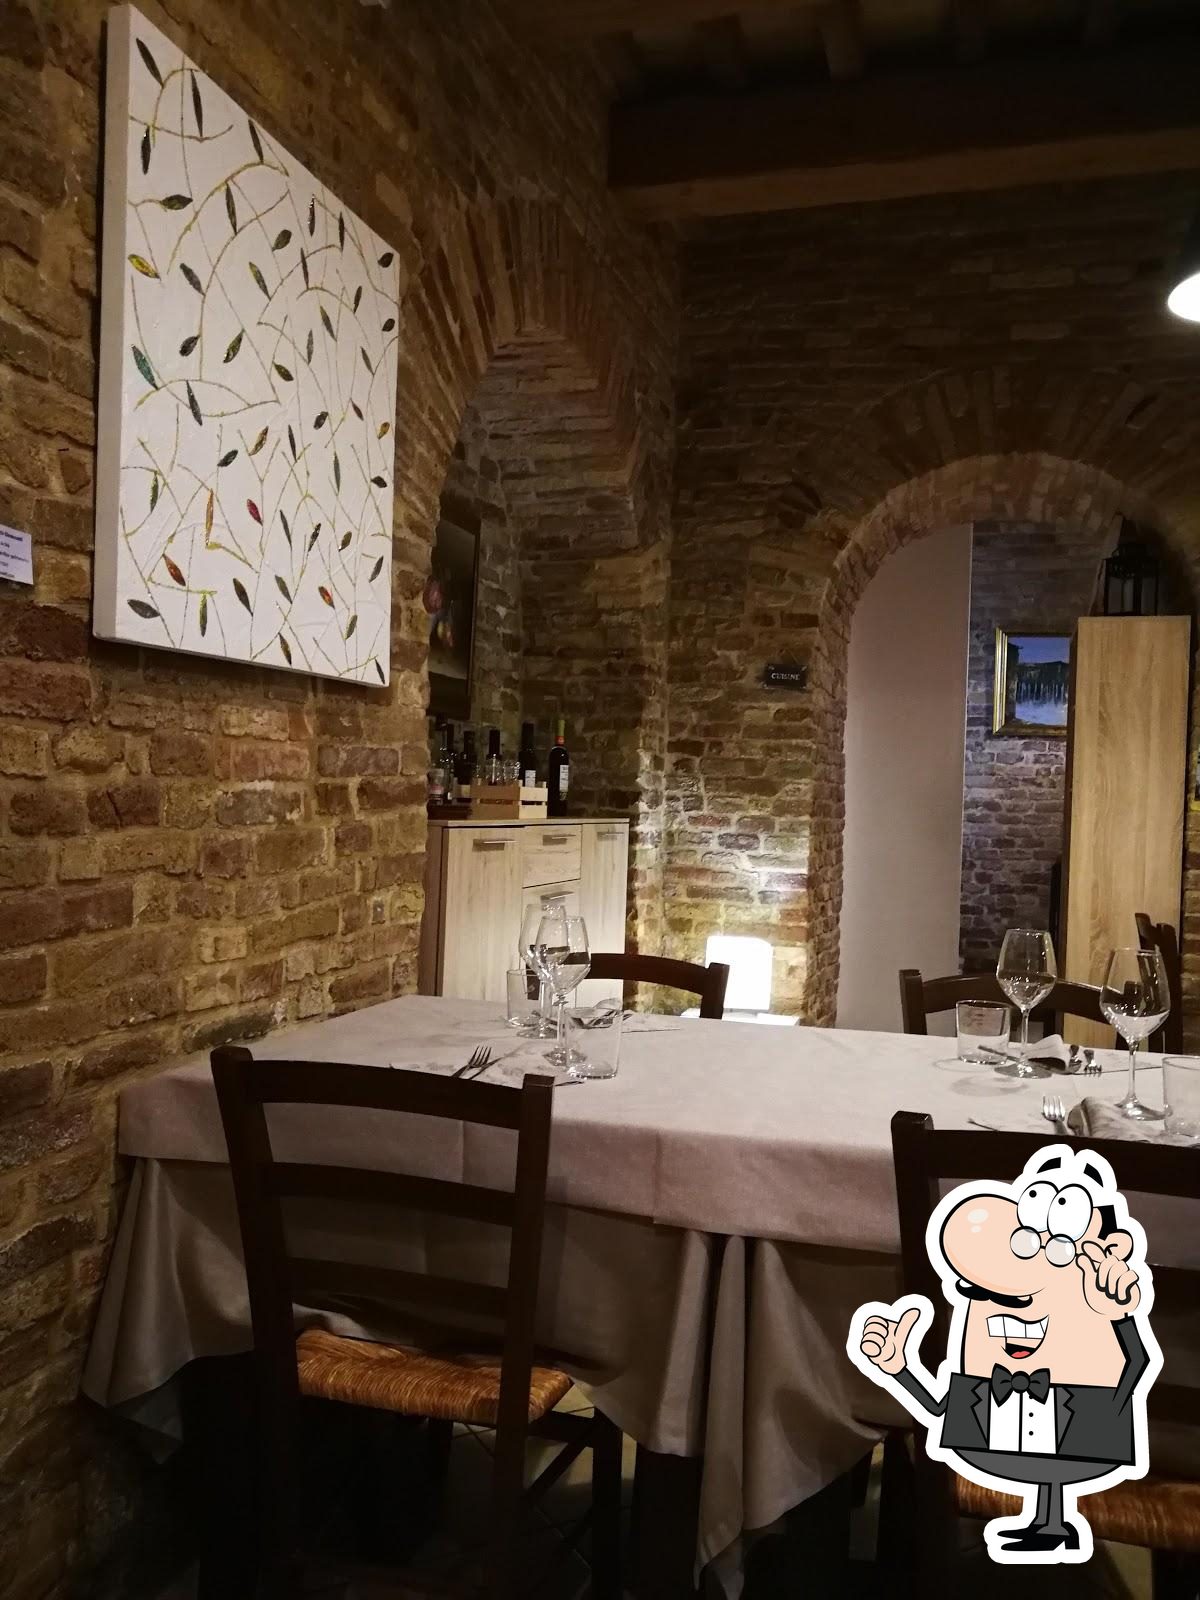 Osteria Fuori Porta in Ostra - Restaurant Reviews, Menus, and Prices